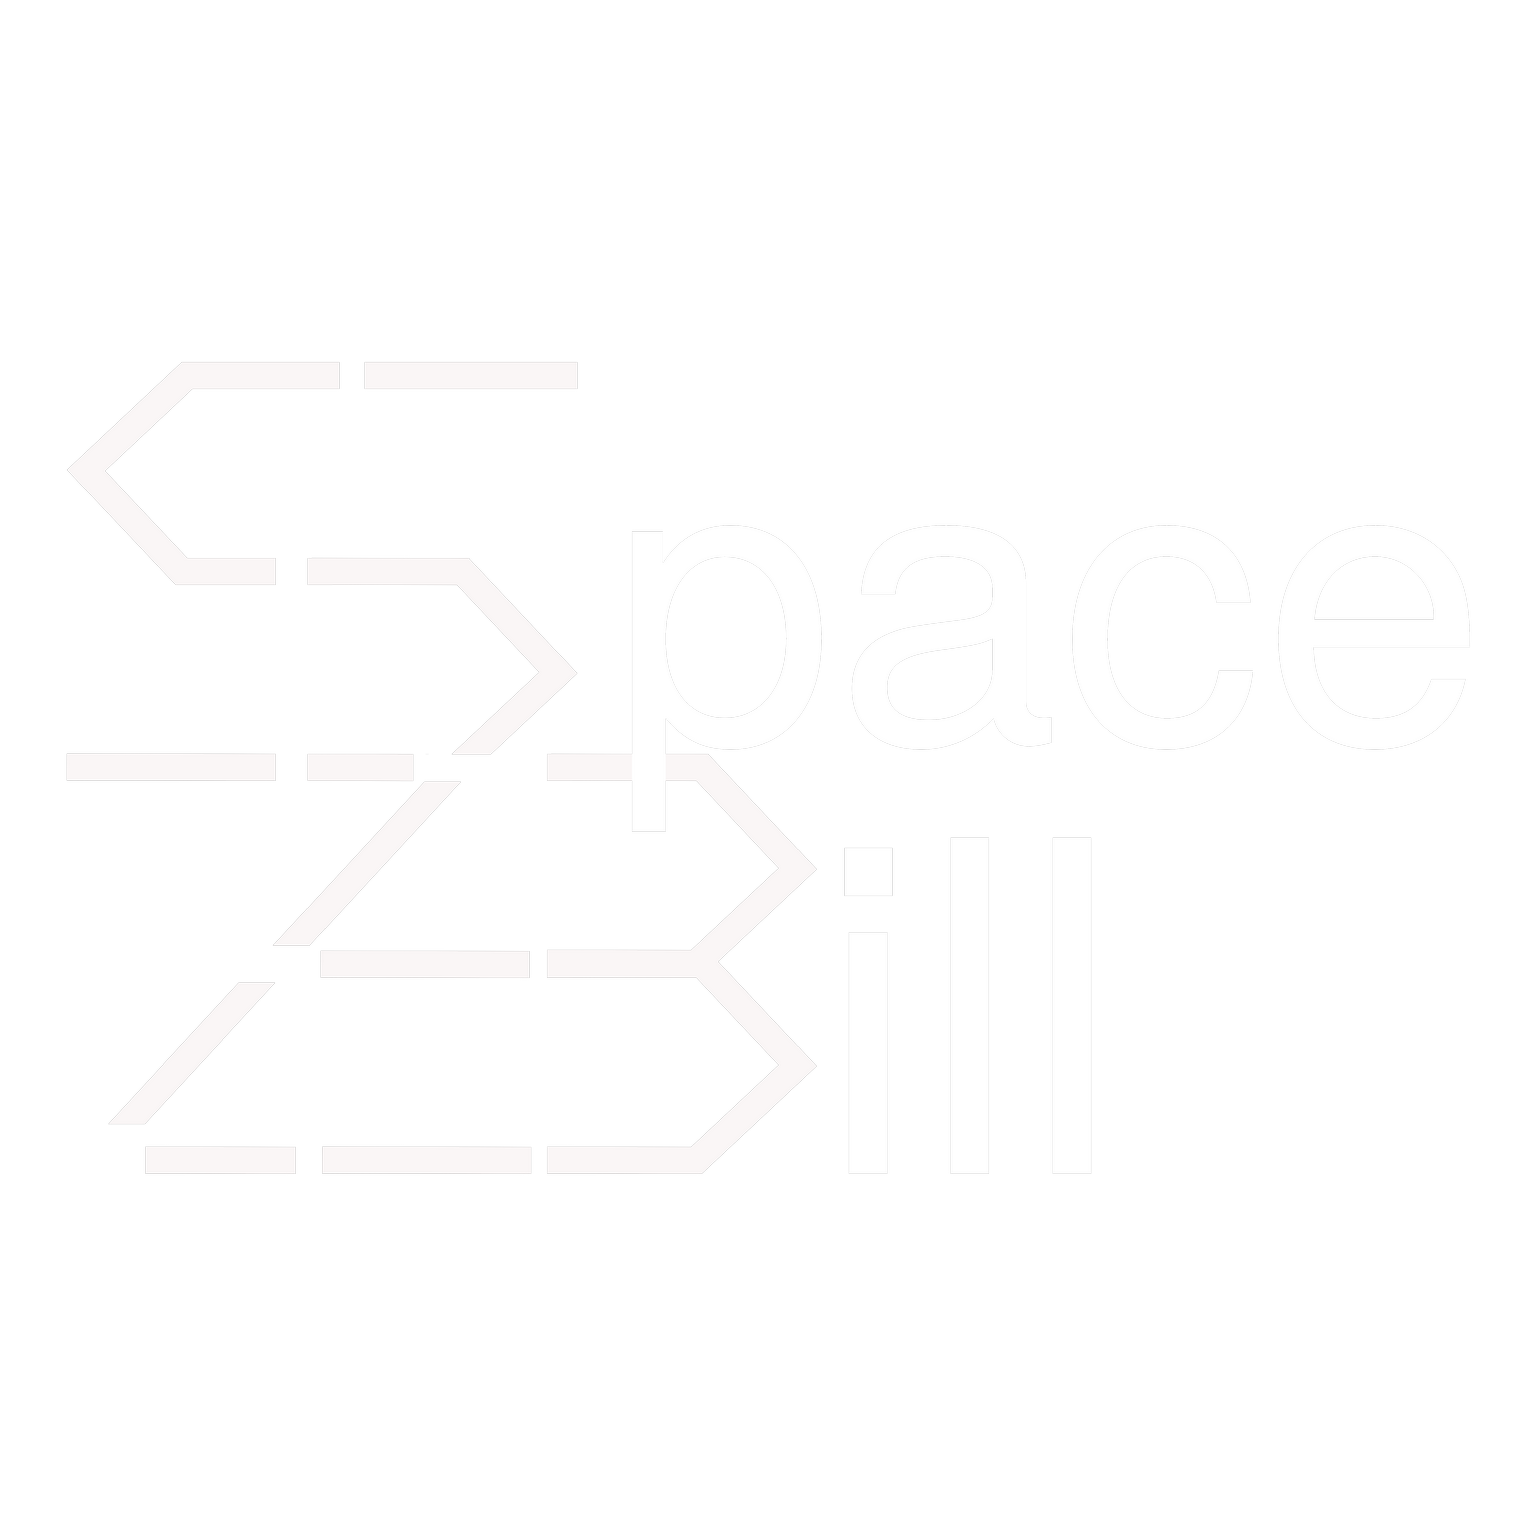 Spacebill Logo